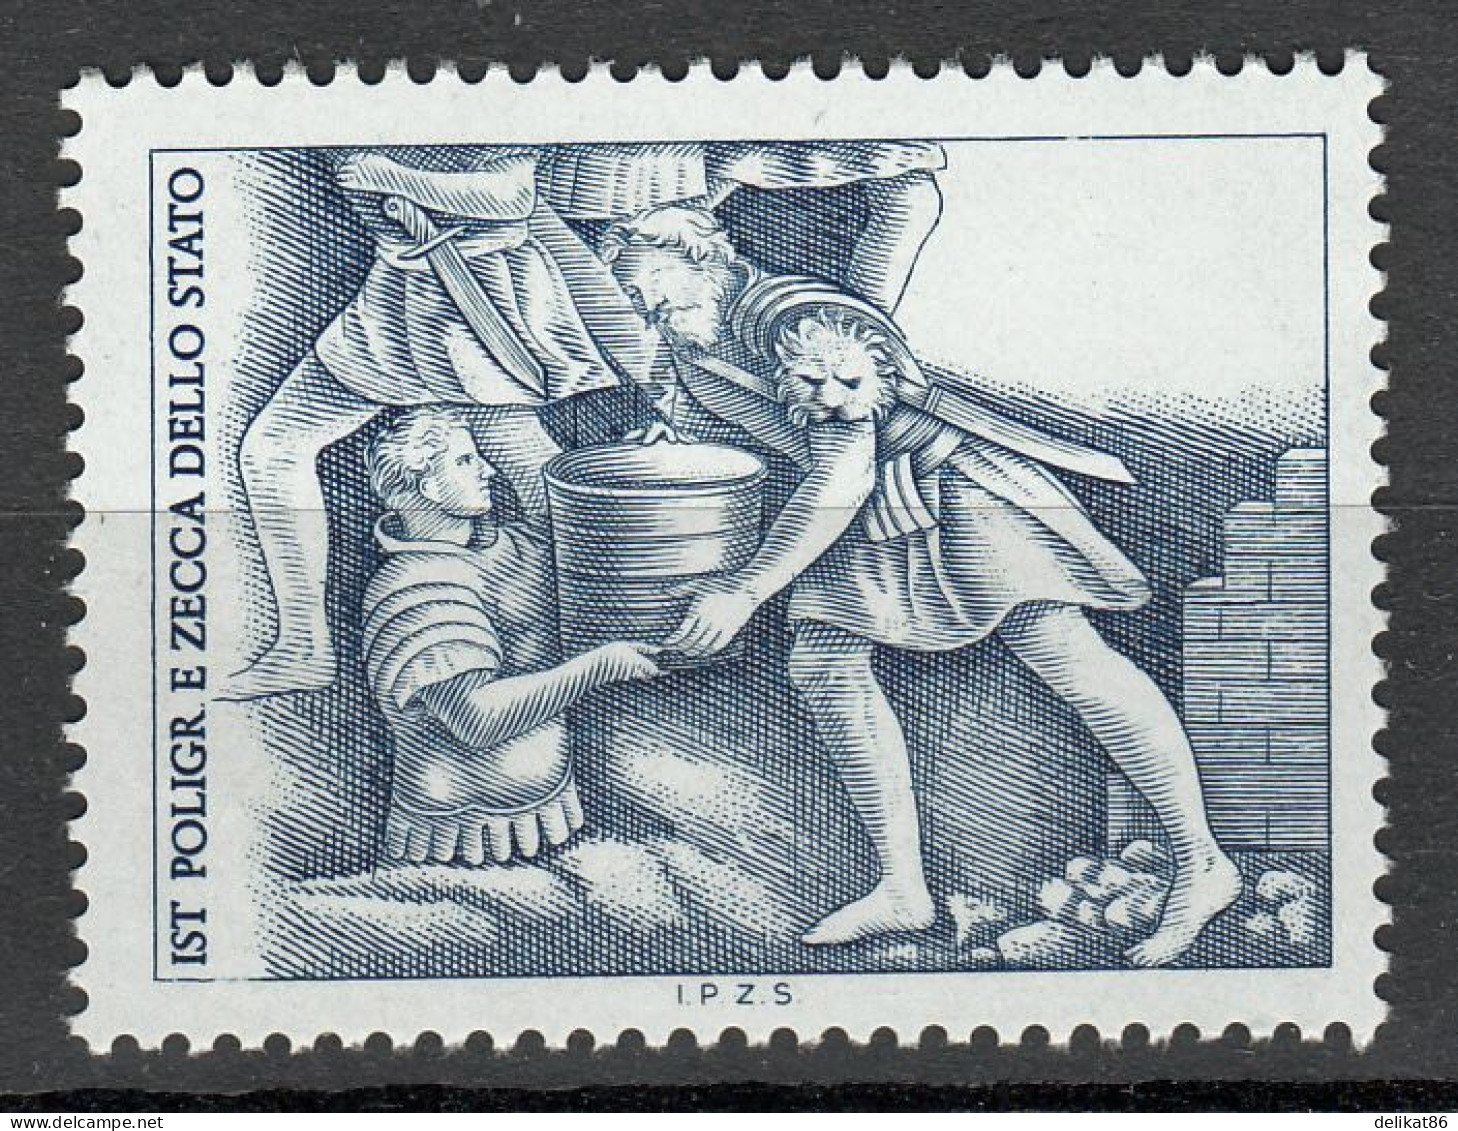 Probedruck Test Stamp Specimen Prove Istituto Poligrafico Dello Stato 2003 - 2001-10: Mint/hinged